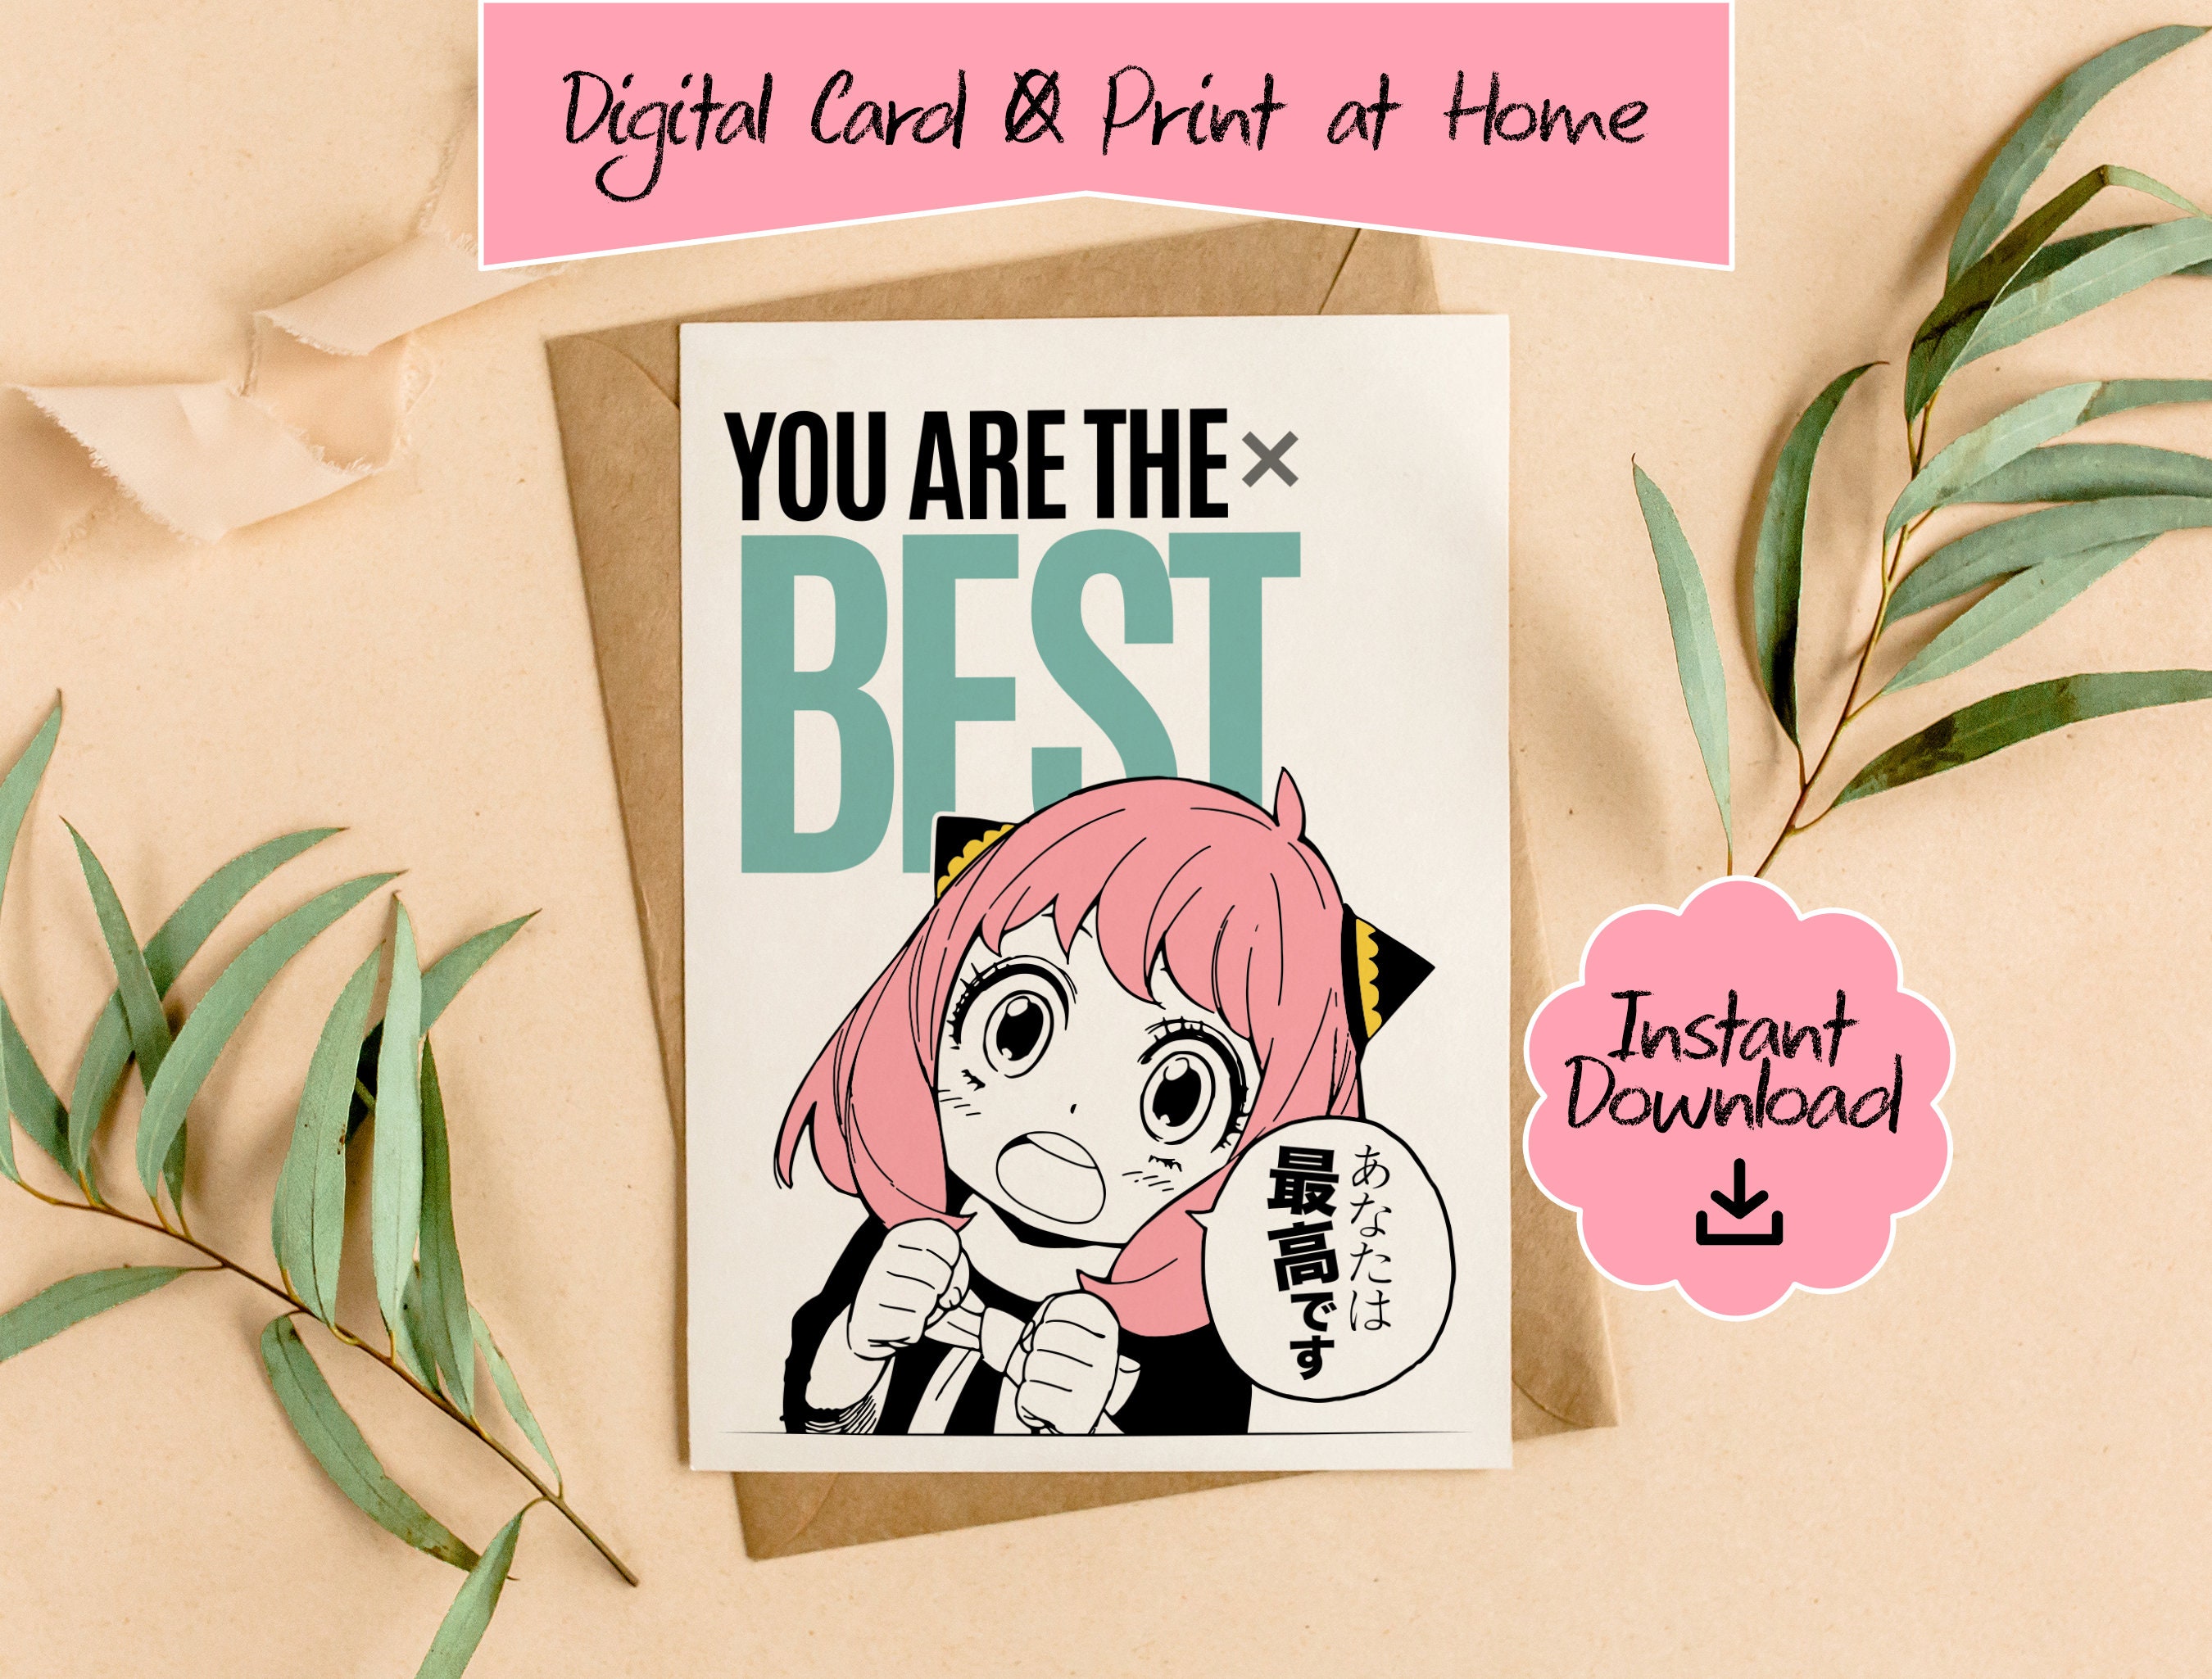 Retro Anime Manga Smug Face Curious Smile Girl Meme Greeting Card for Sale  by MidNight Ideas